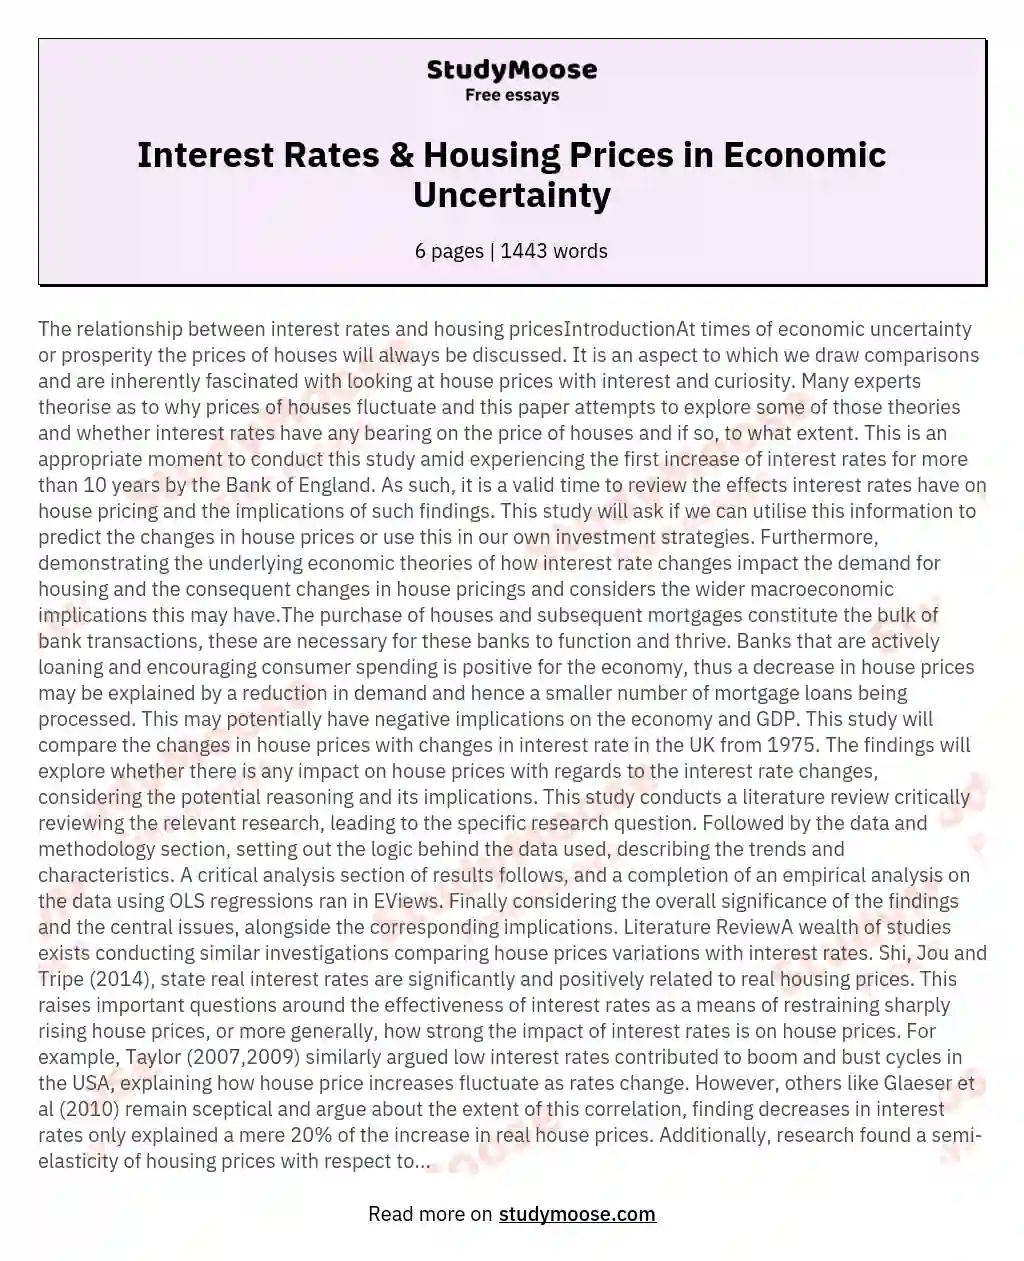 Interest Rates & Housing Prices in Economic Uncertainty essay